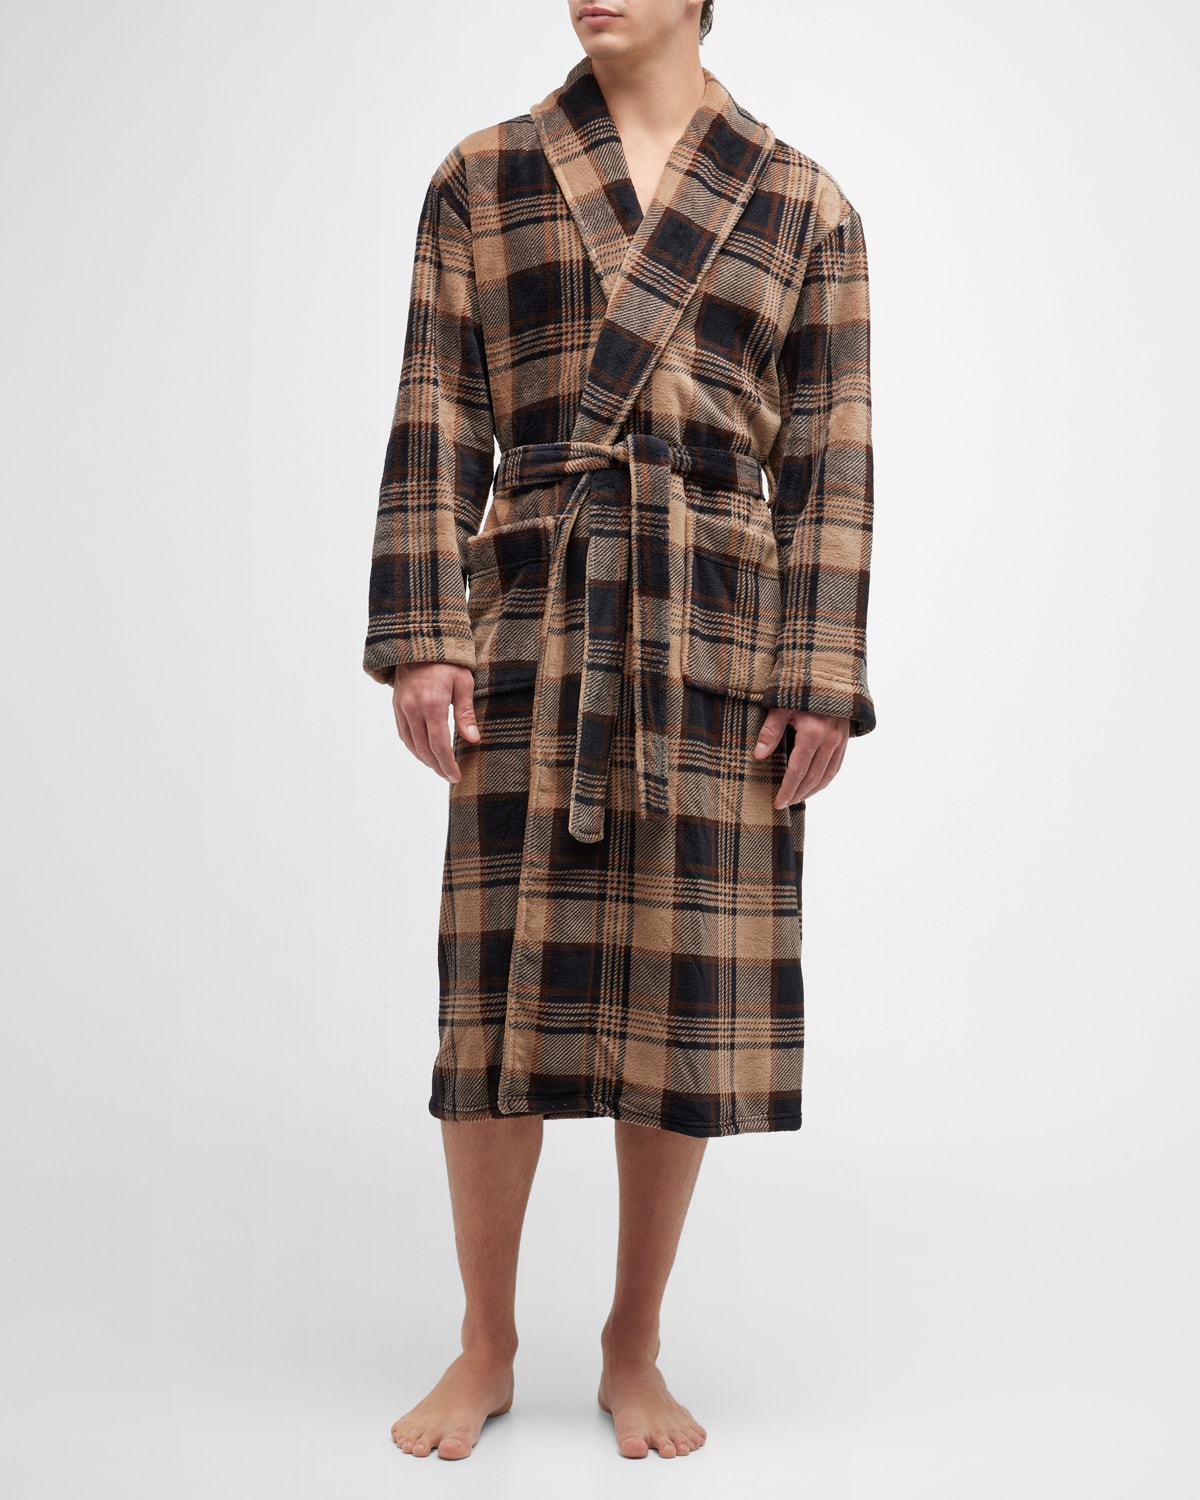 Men's Plaid Fleece Robe